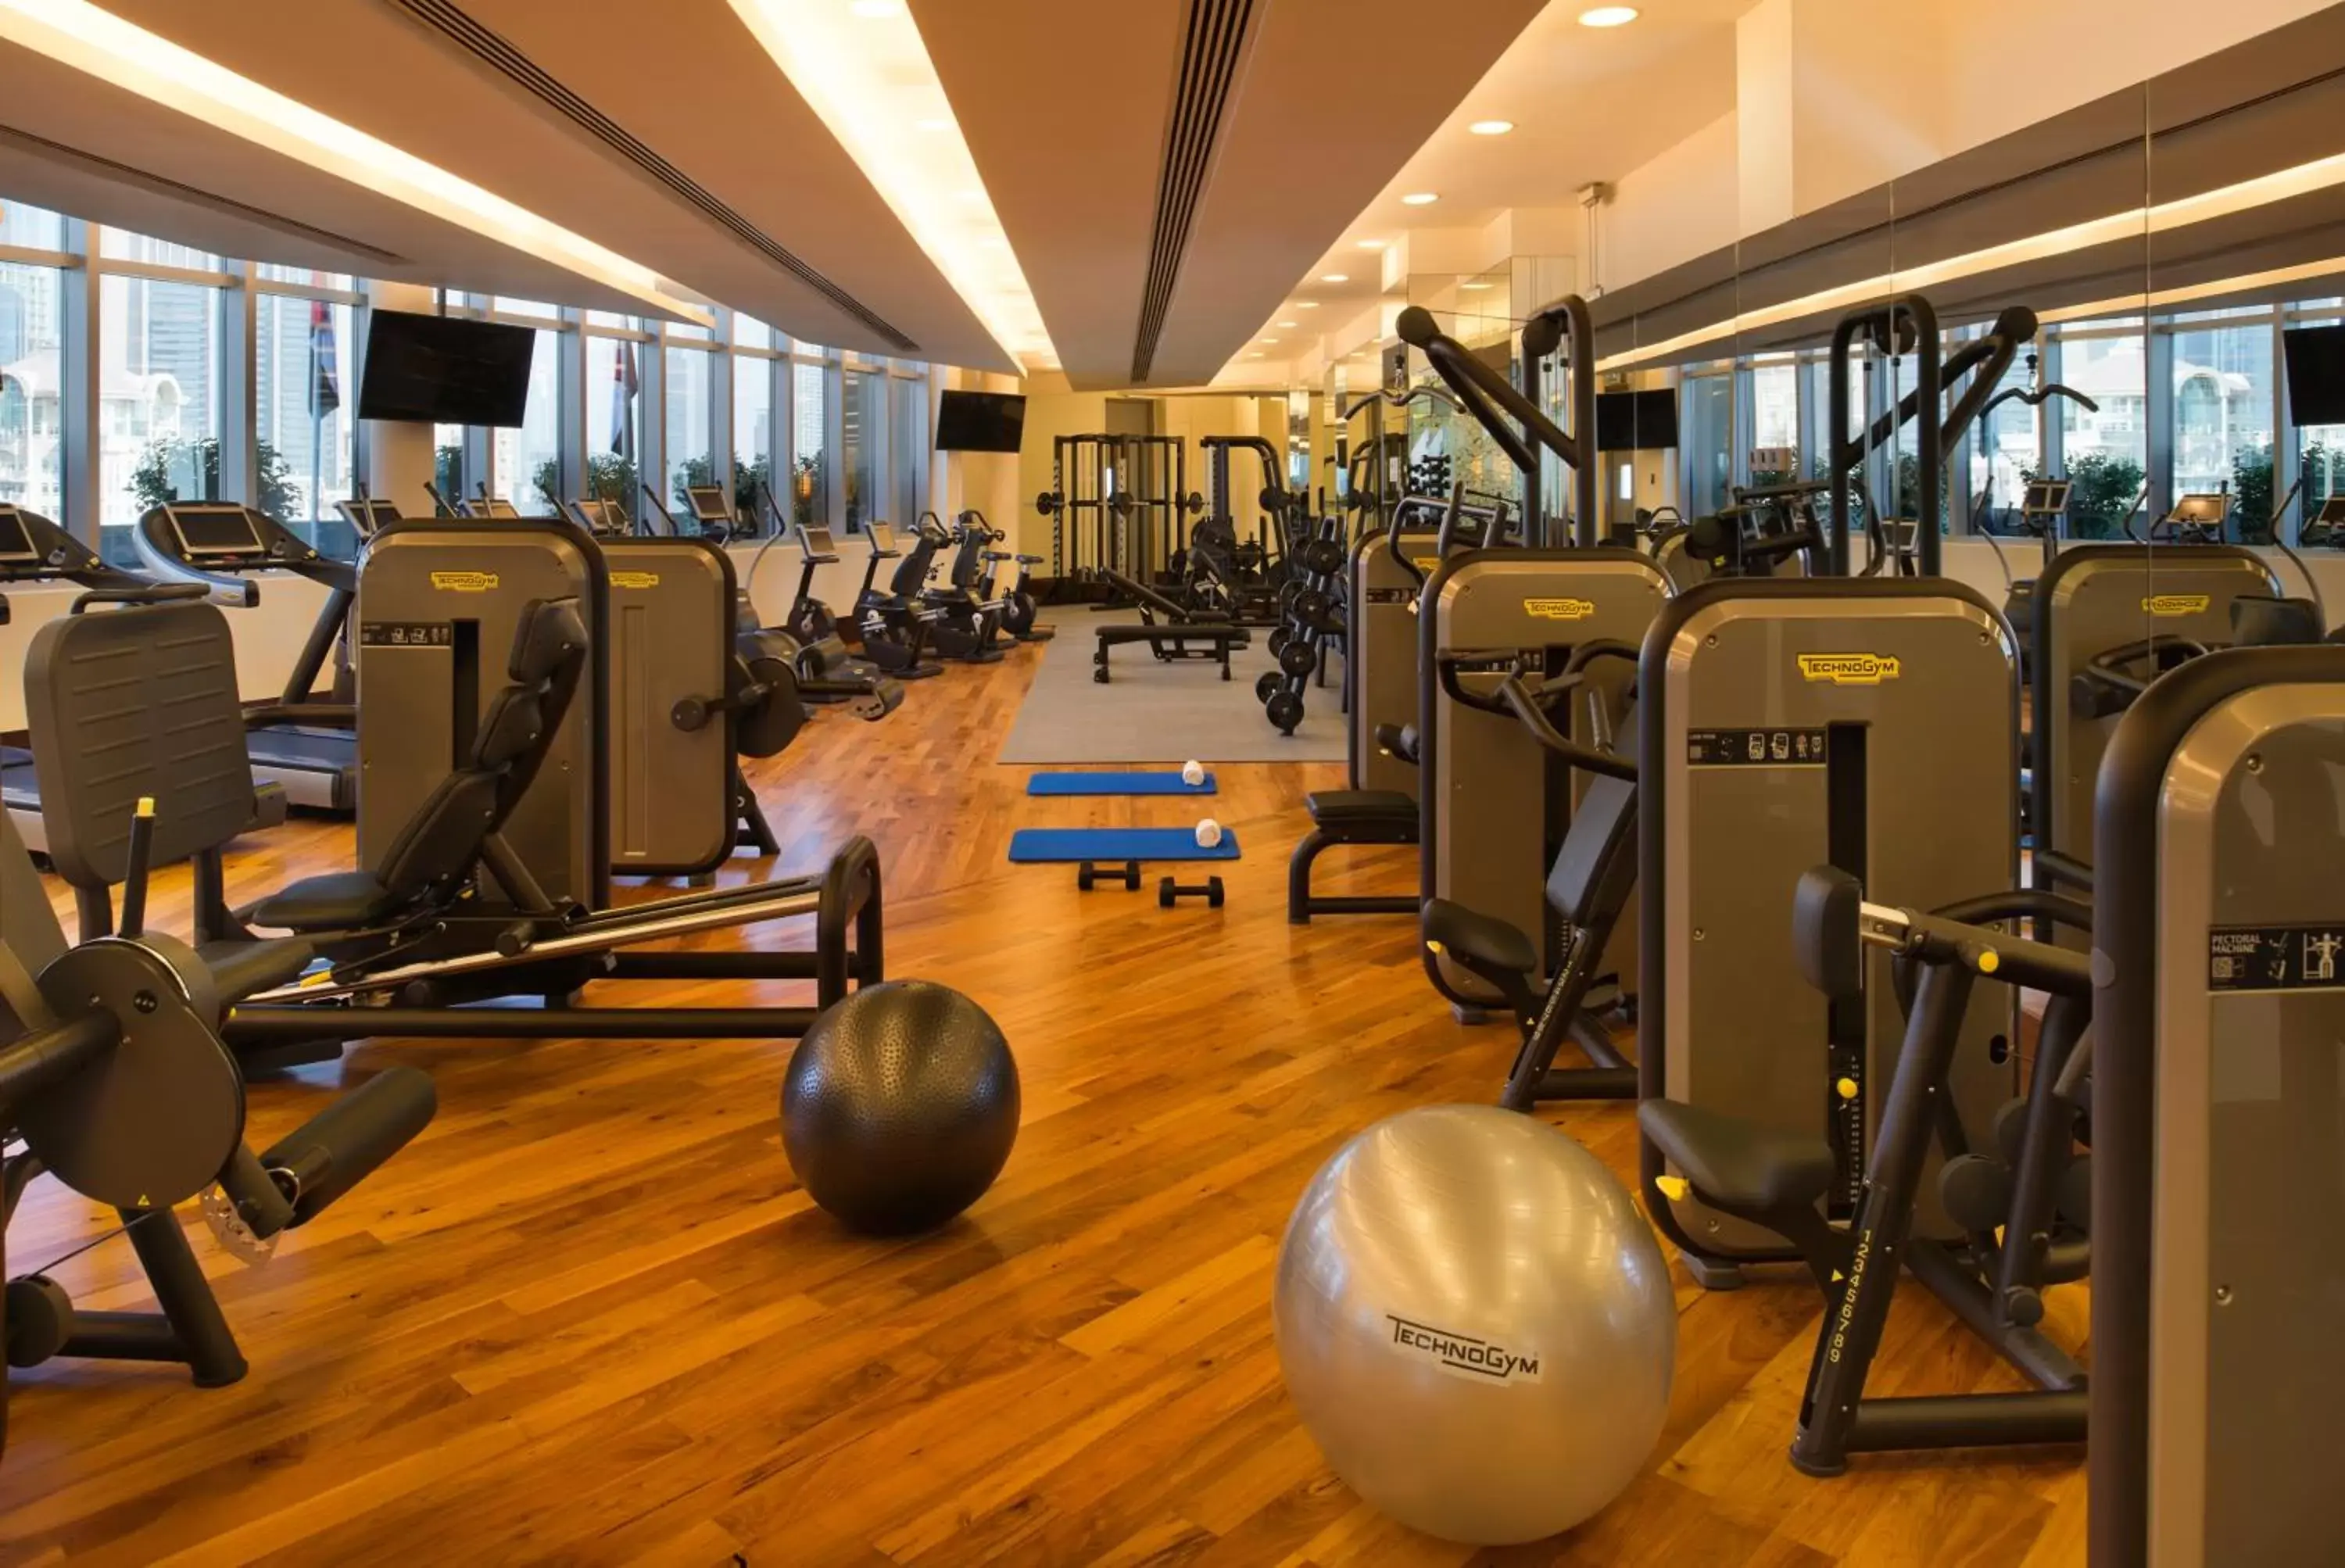 Fitness centre/facilities, Fitness Center/Facilities in Address Dubai Mall